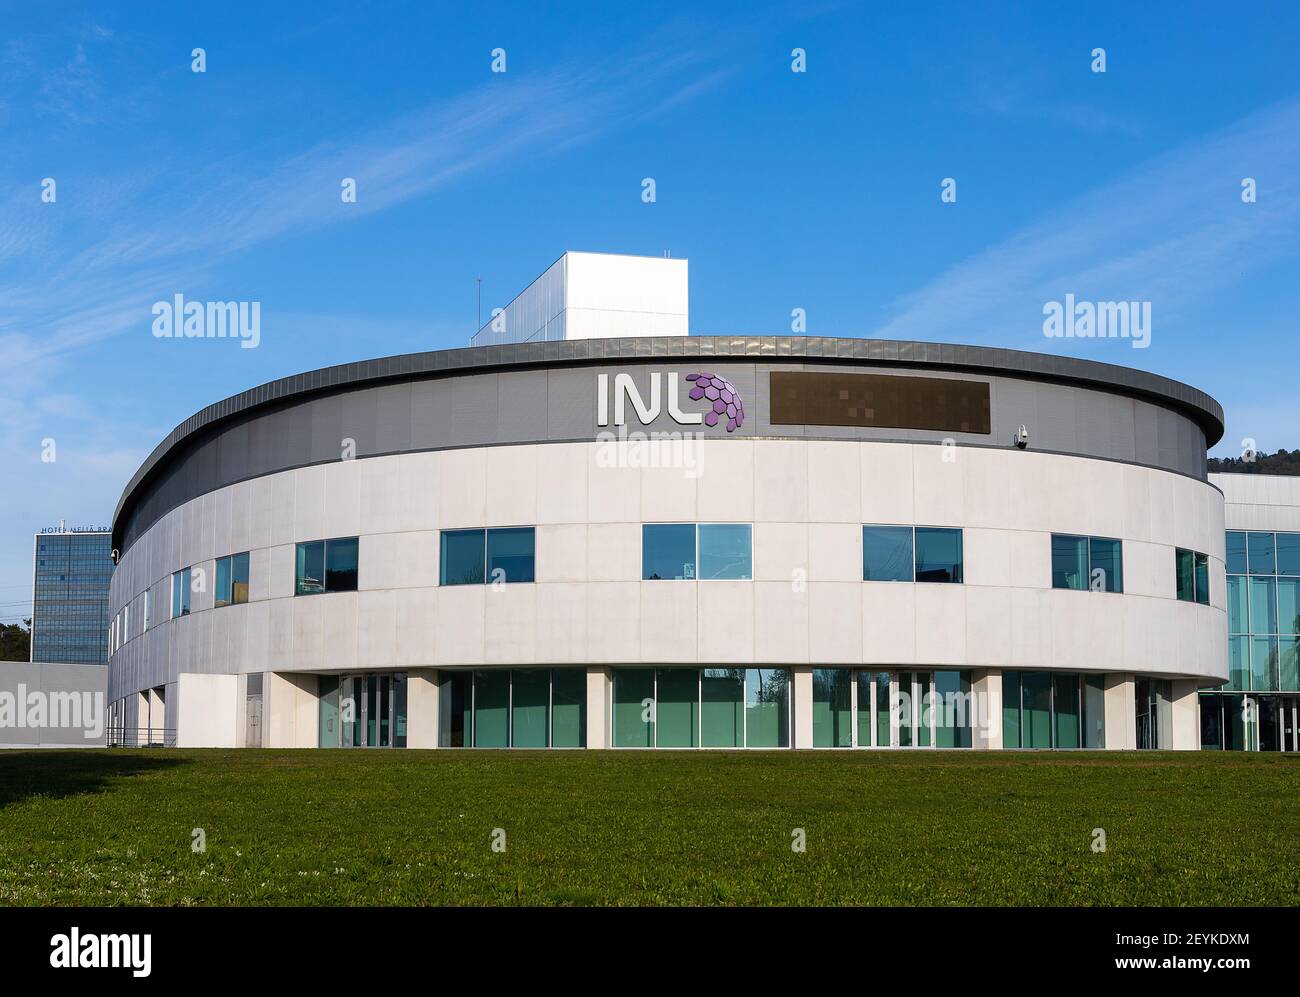 Braga, Portugal - March 12, 2020: INL - International Iberian Nanotechnology Laboratory building Stock Photo